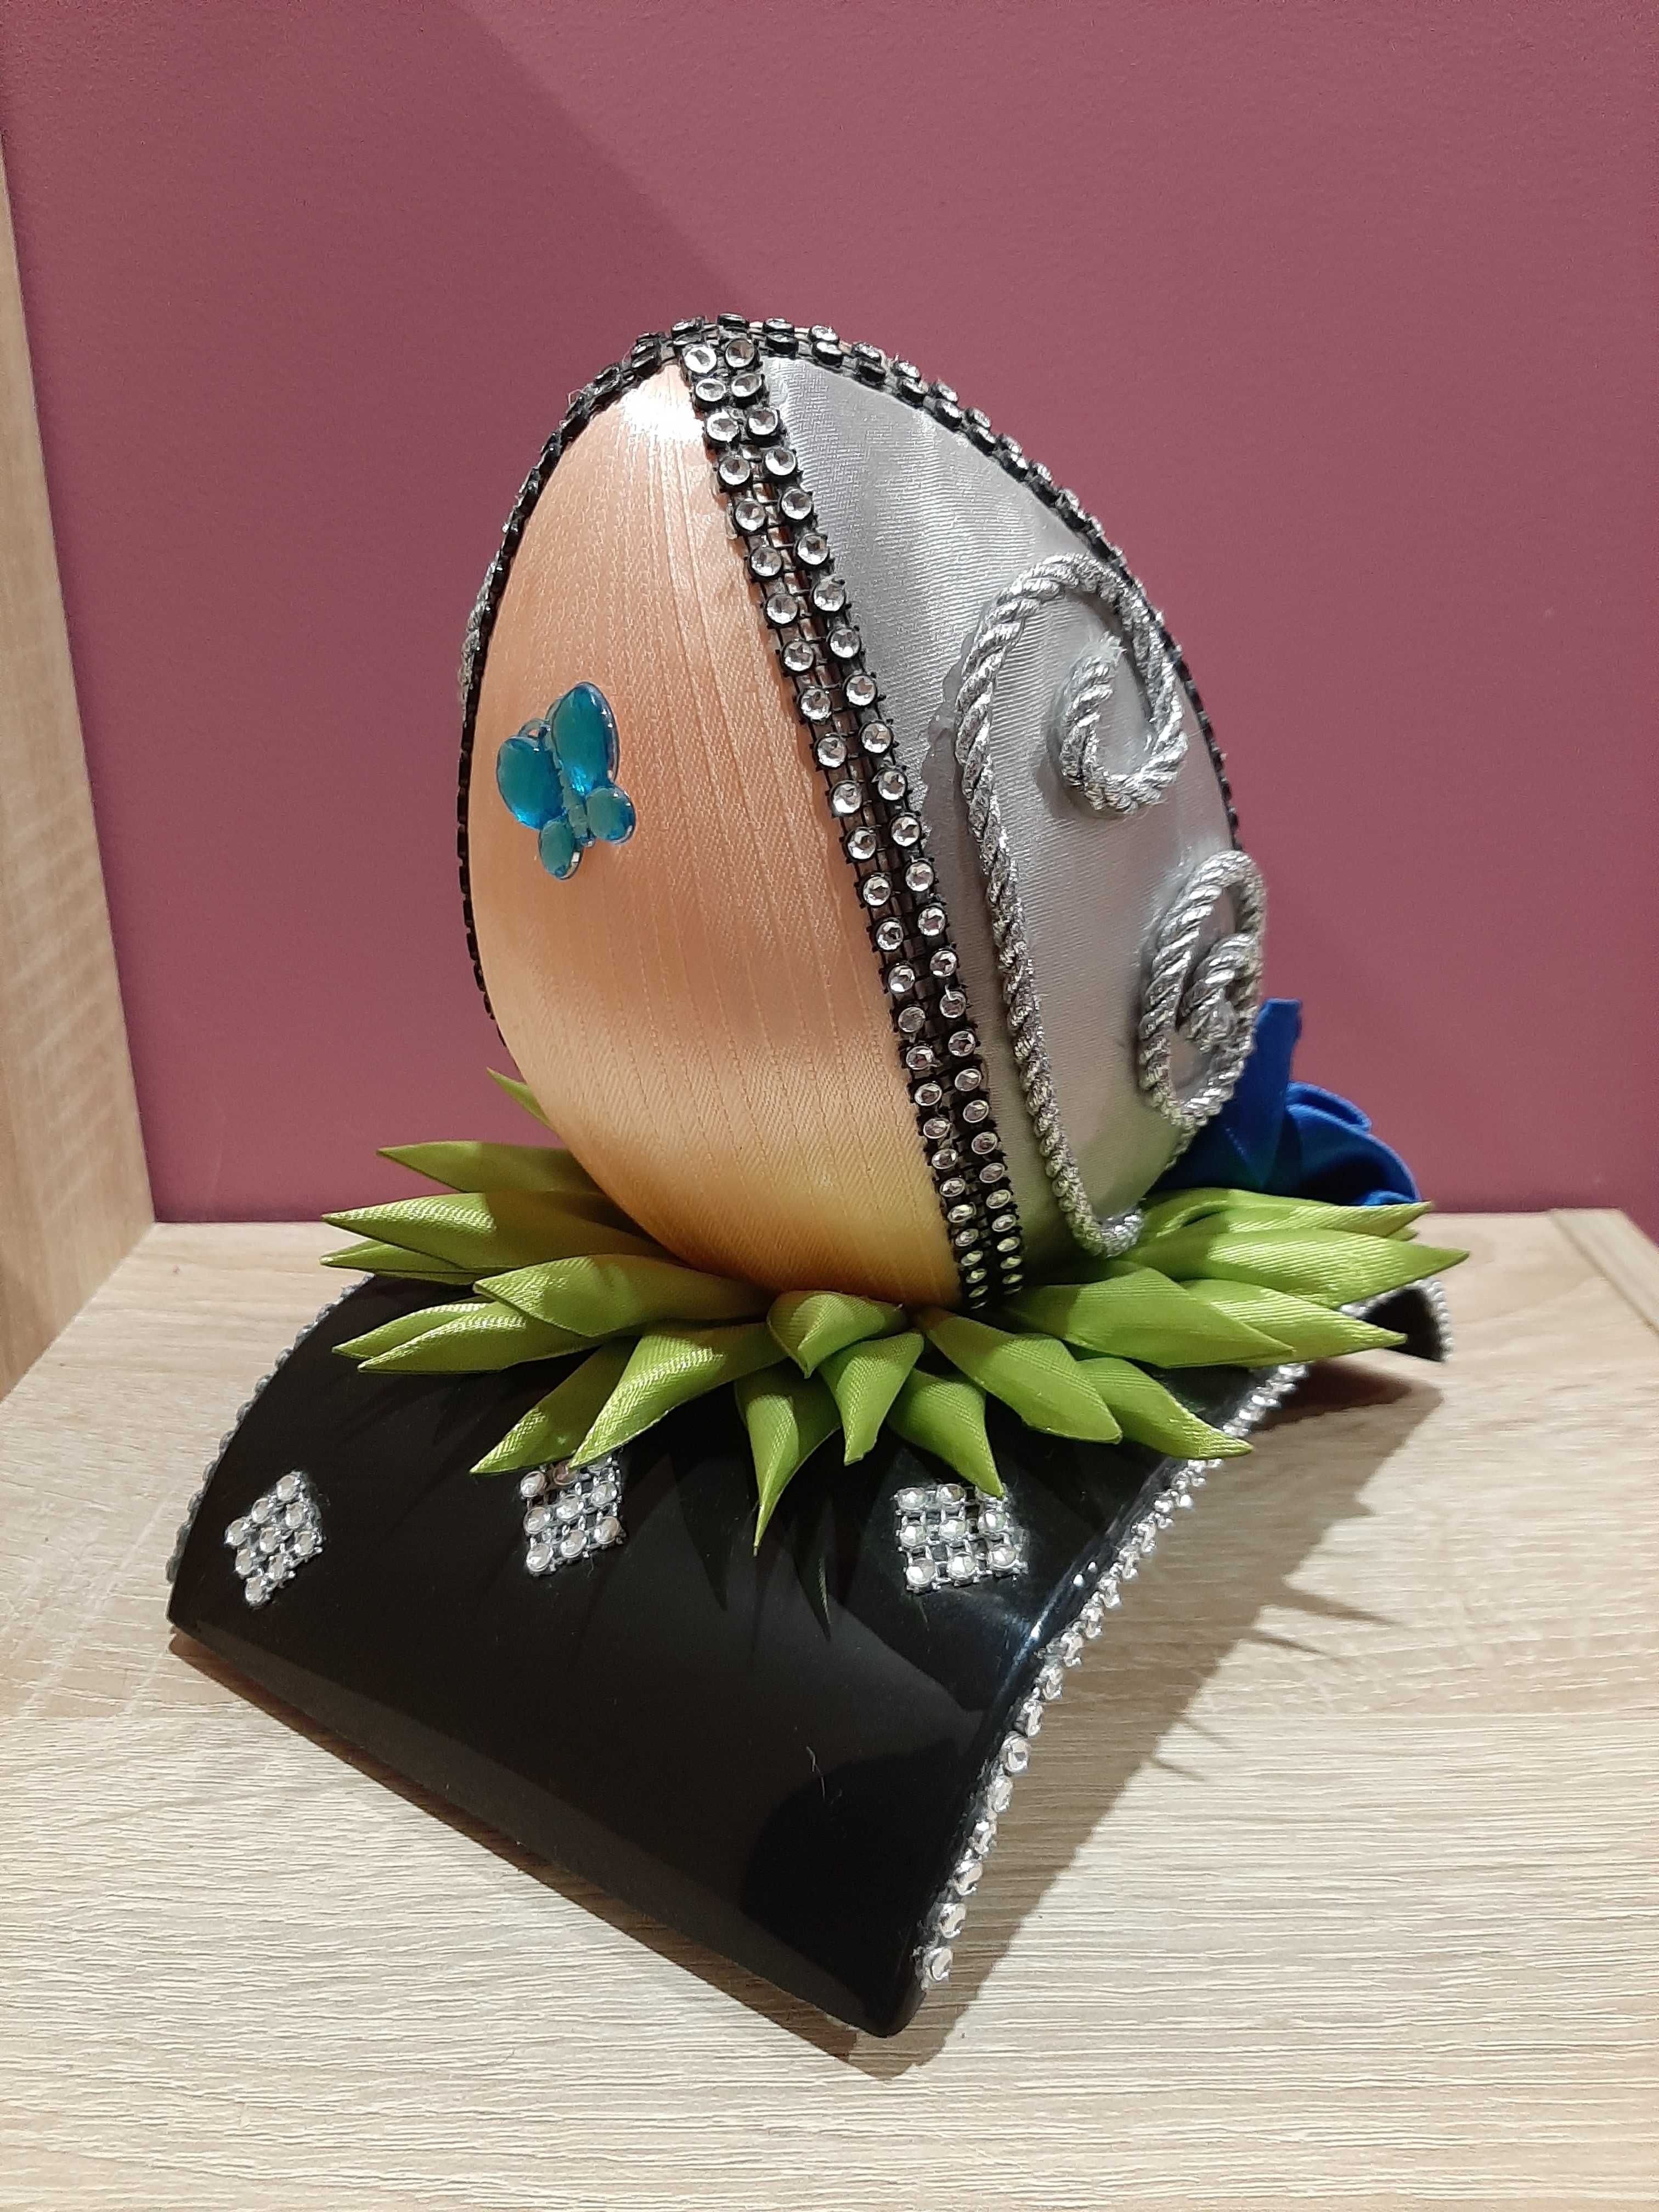 Dekoracja handmade jajko wielkanocne, pisanka